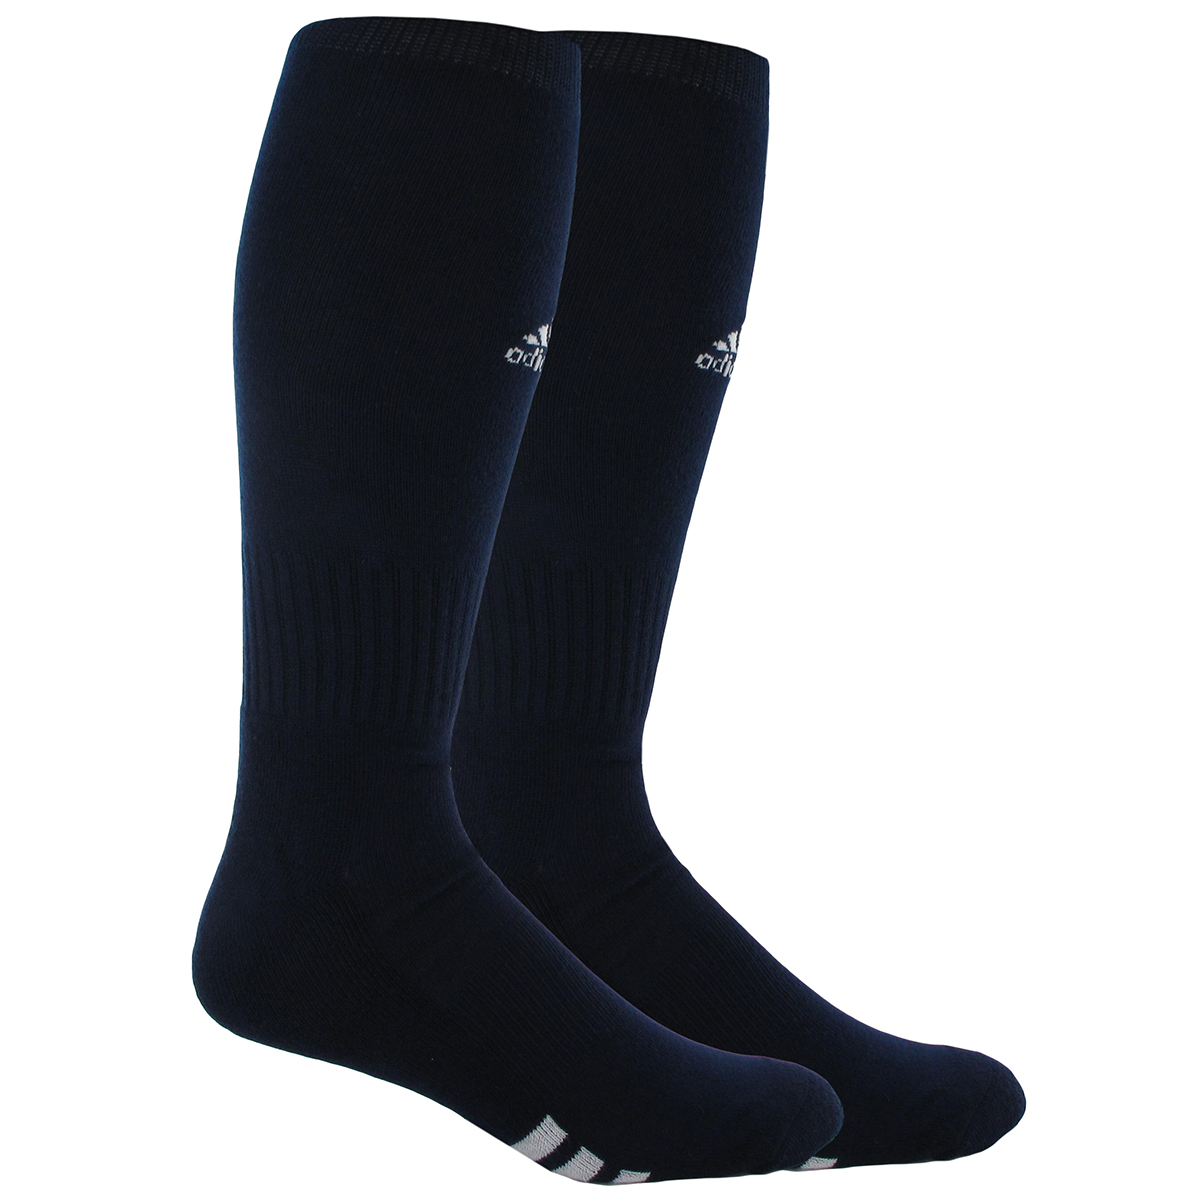 Adidas Rivalry Soccer Socks, 2-Pack - Blue, M